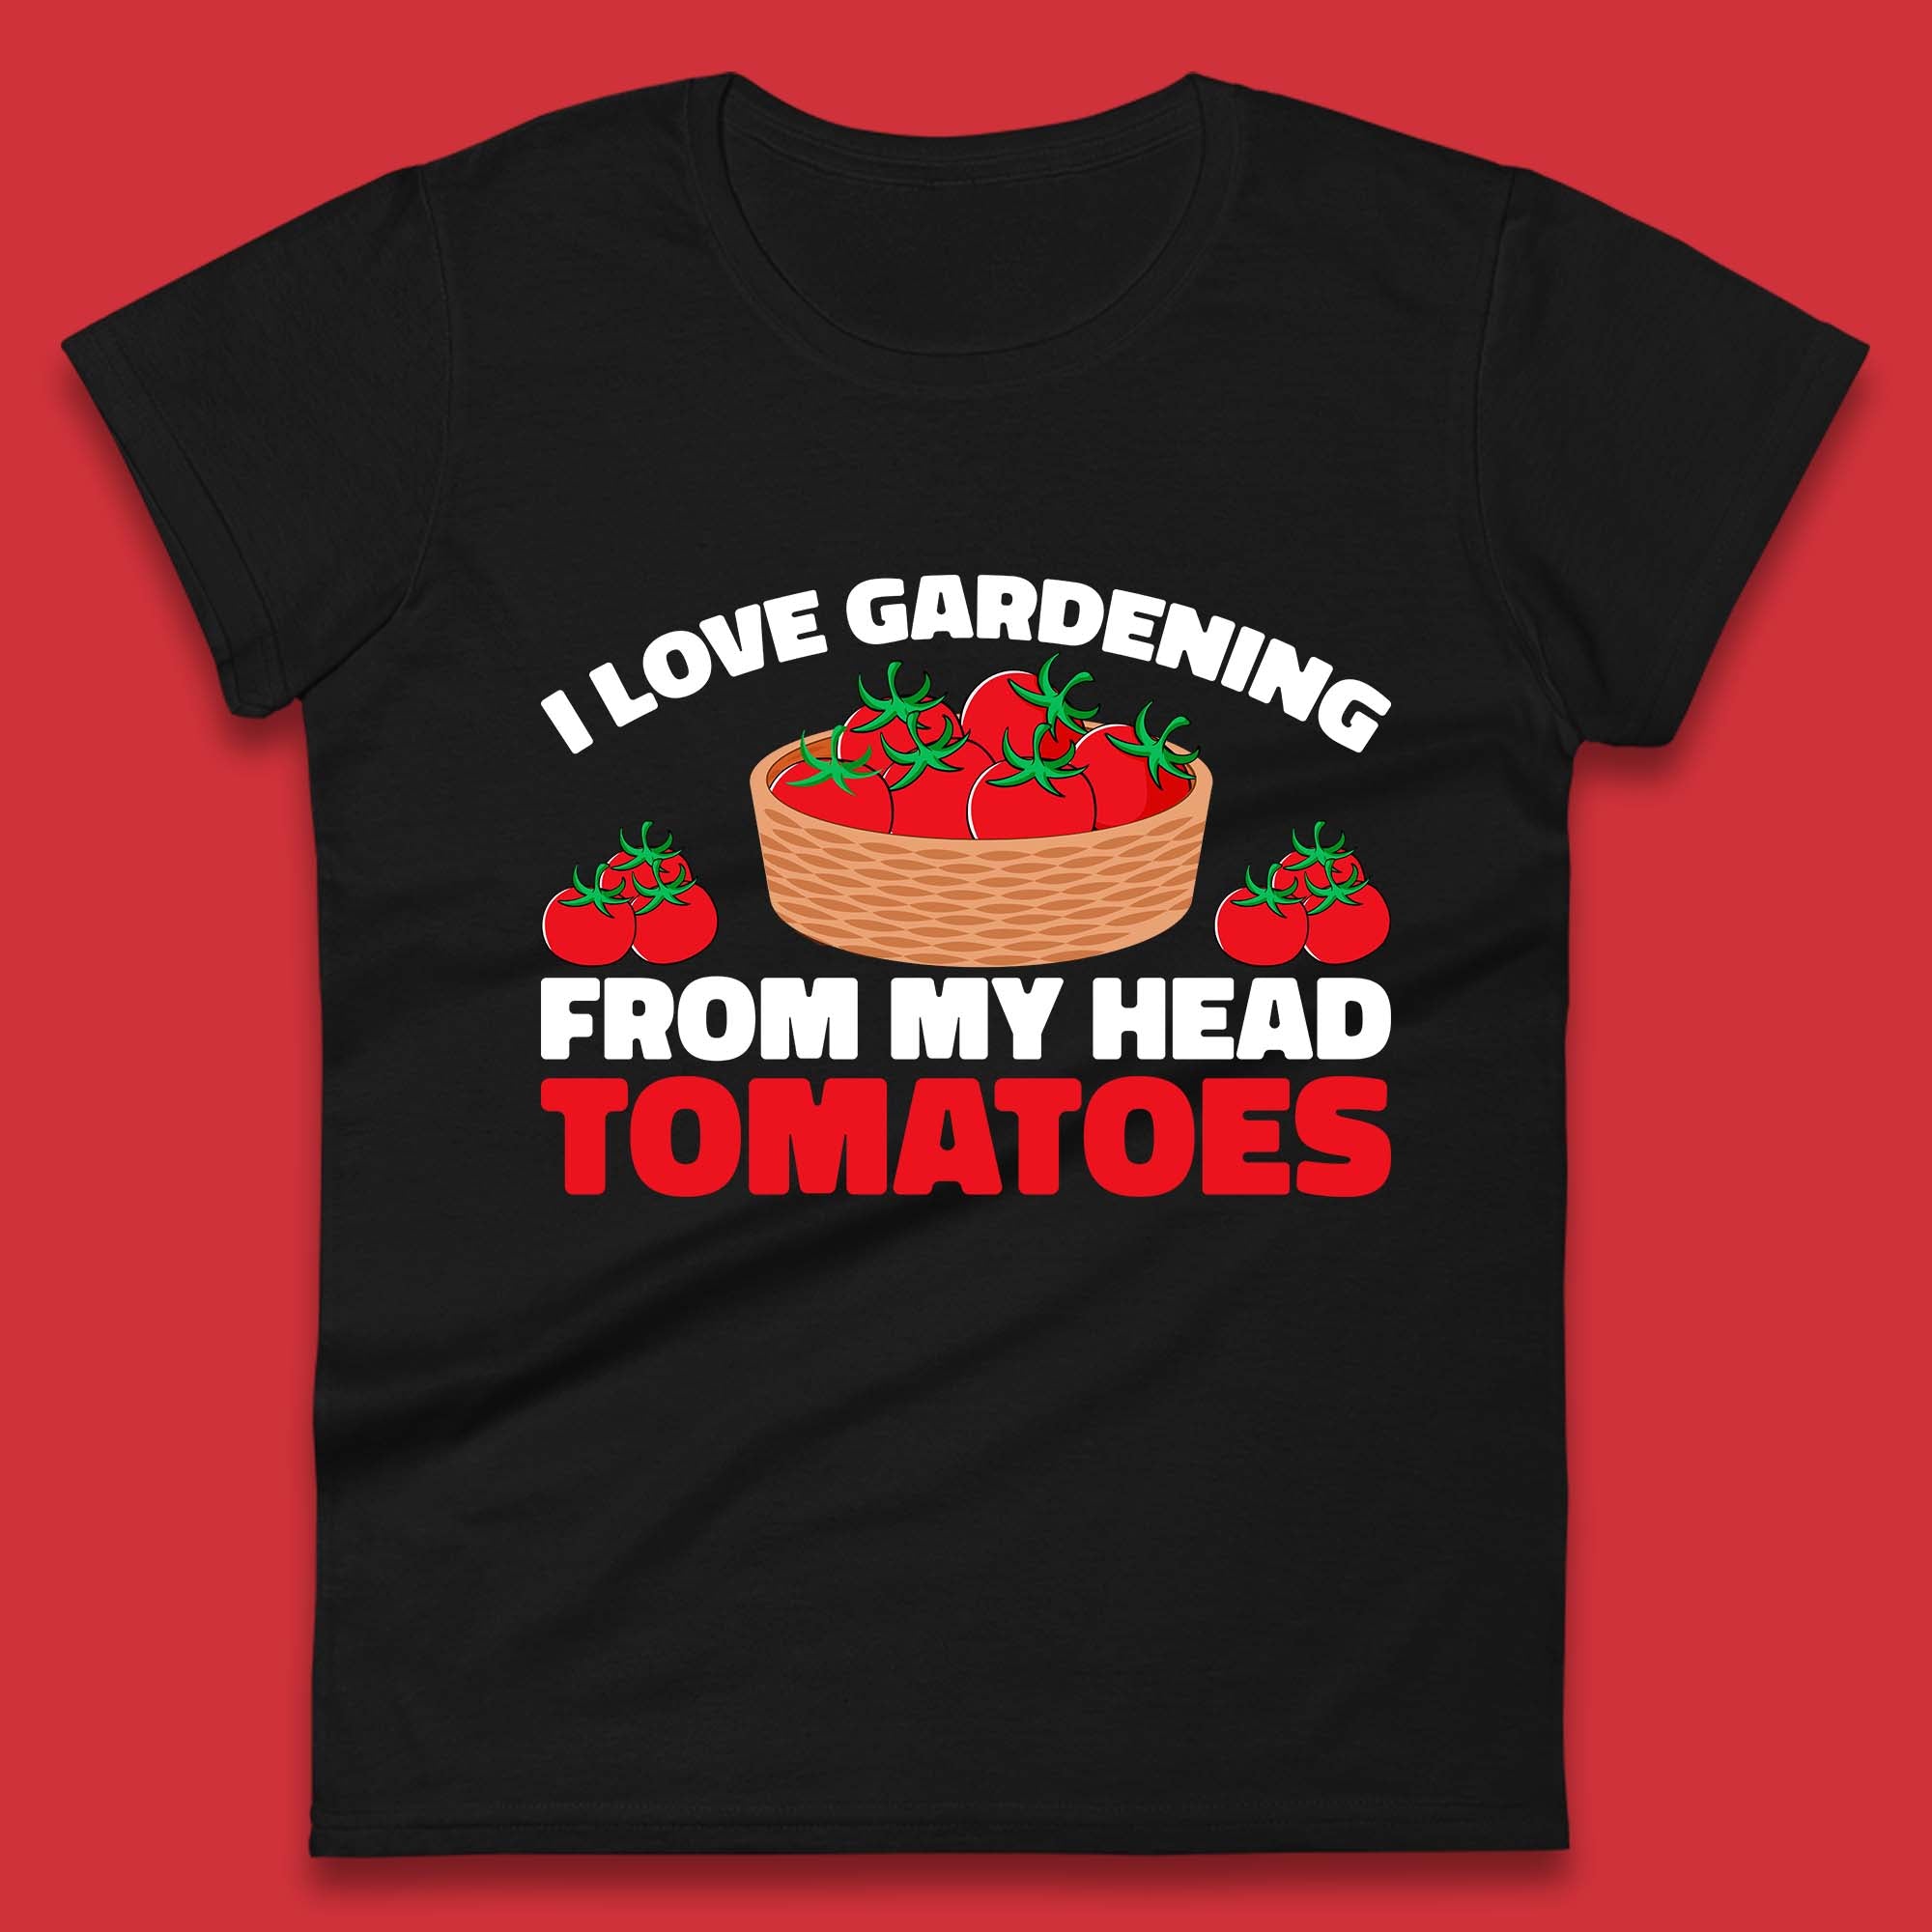 I Love Gardening From My Head Tomatoes Funny Gardeners Garden Womens Tee Top